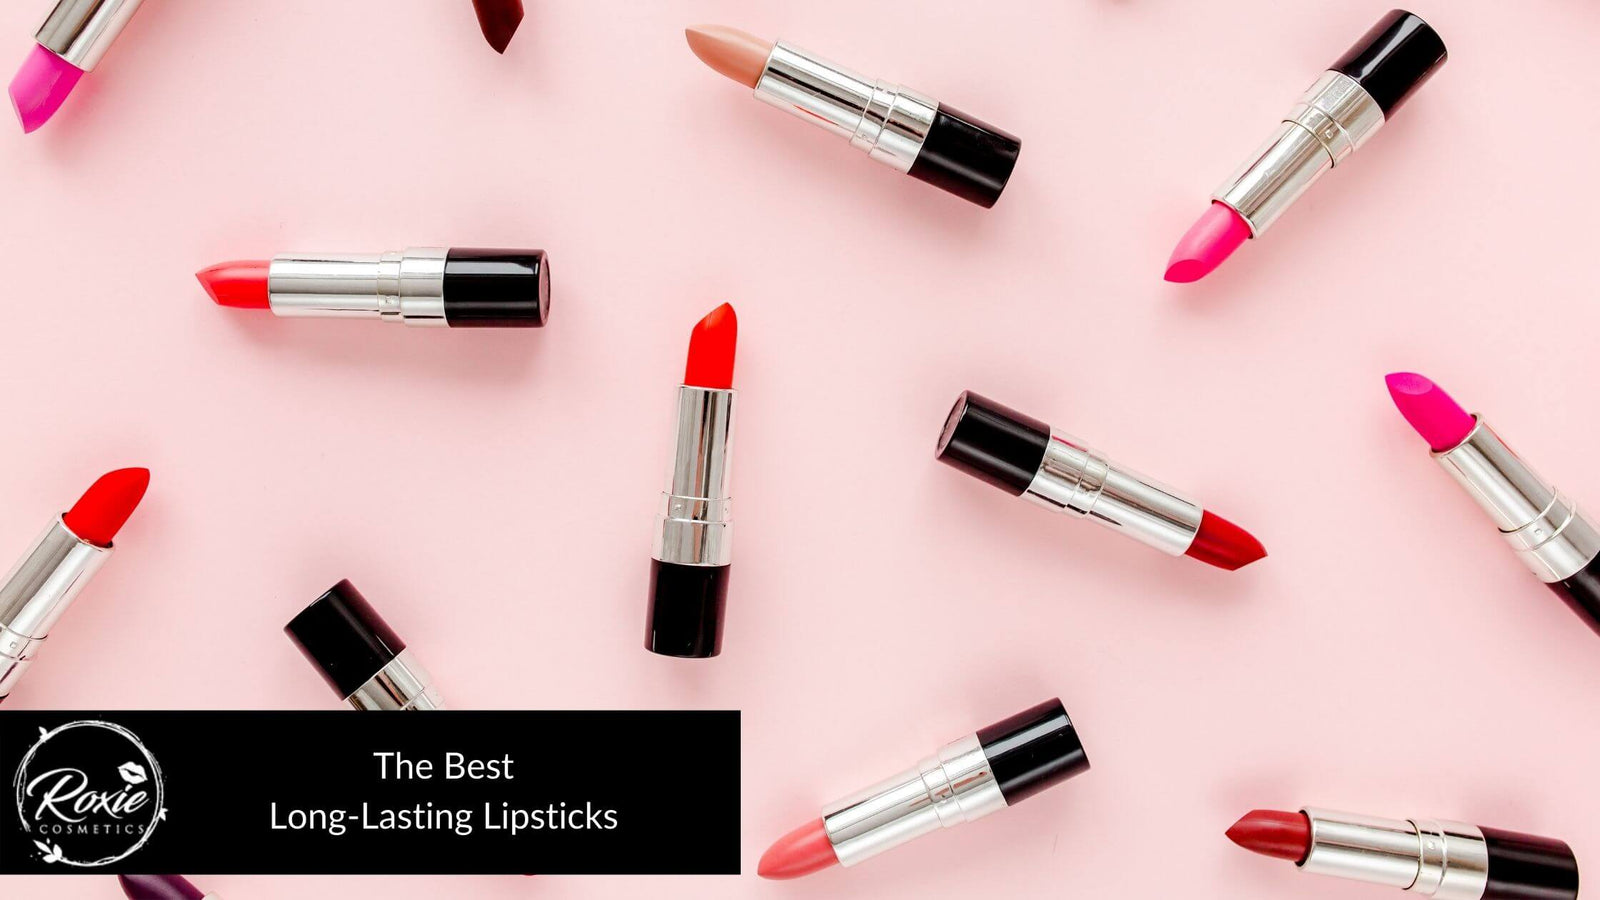 Long-Lasting Lipsticks